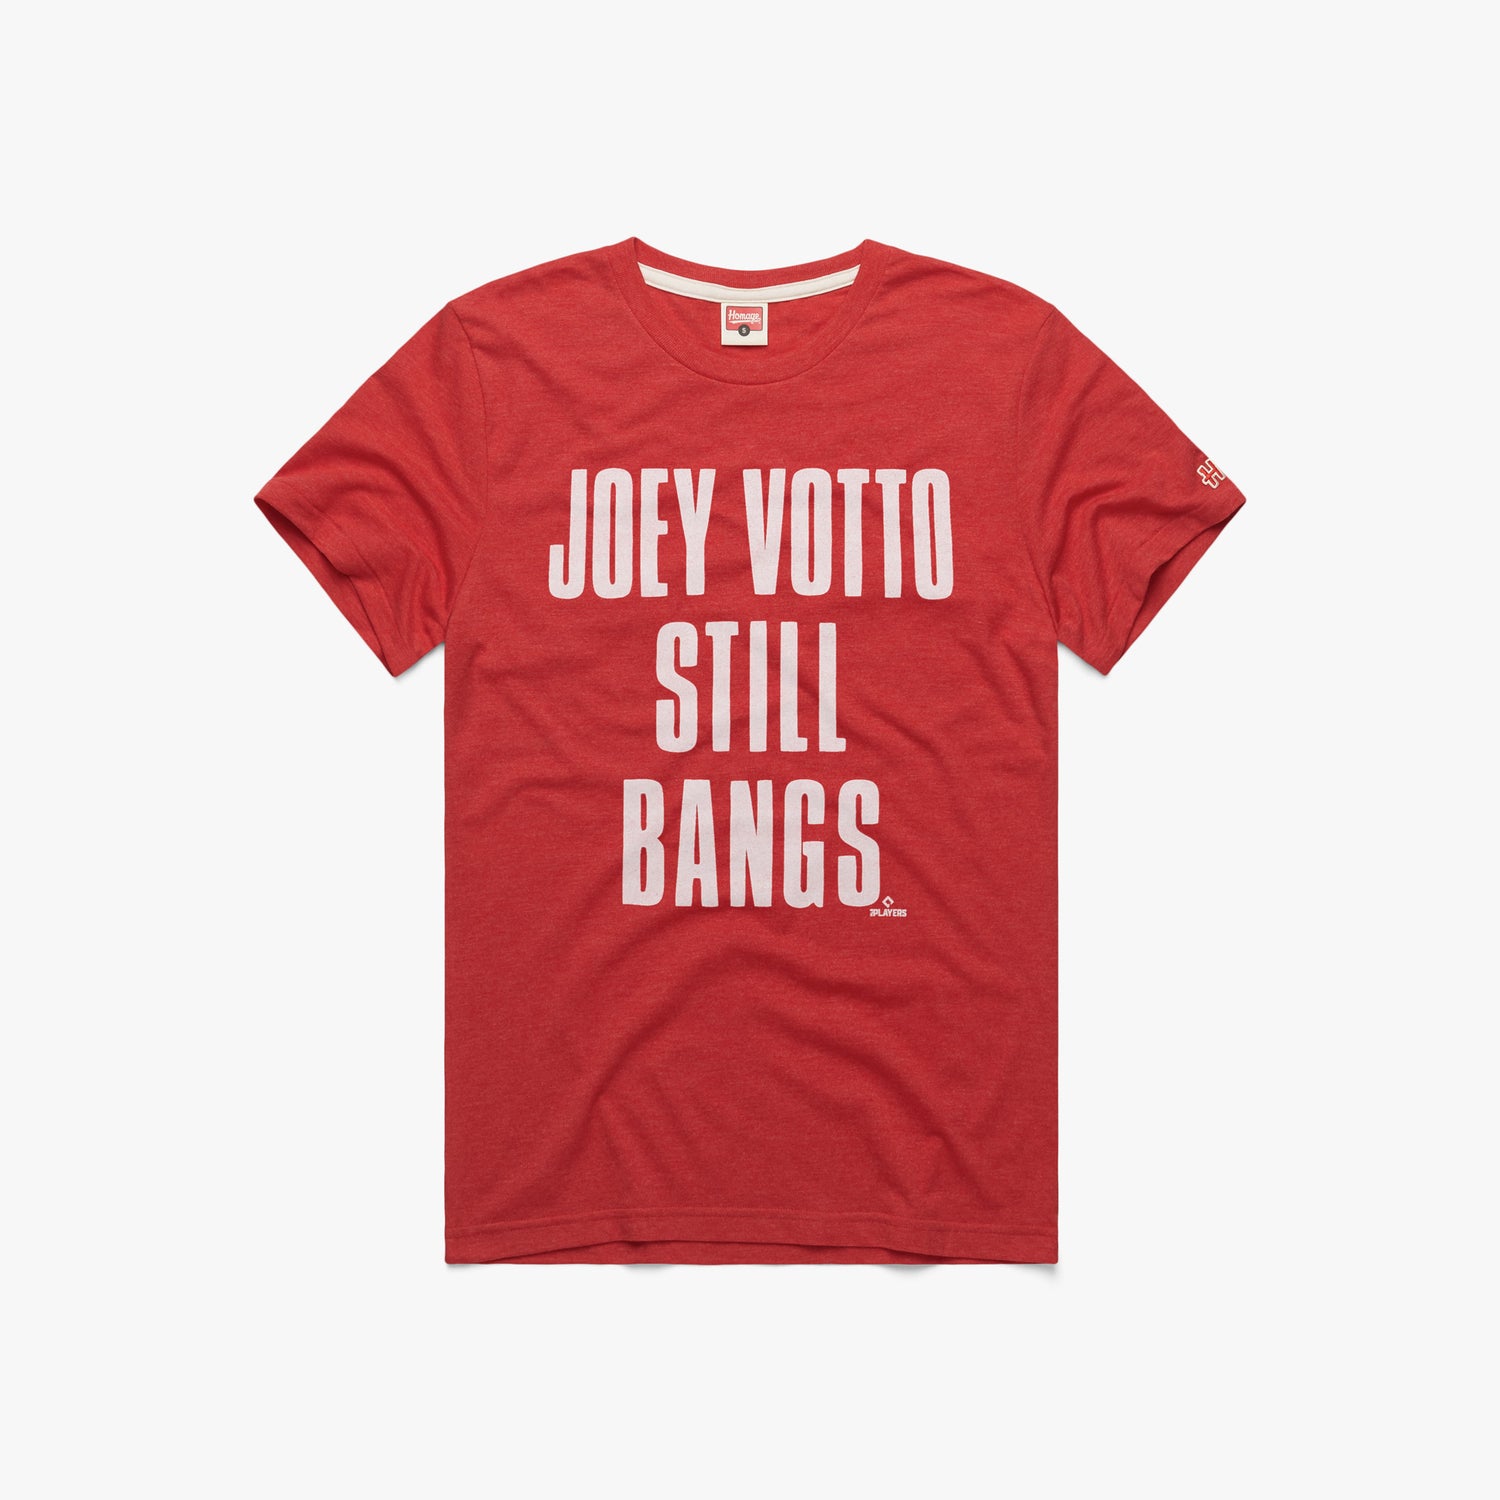 votto Still Bangs, Adult T-Shirt / 2XL - MLB - Sports Fan Gear | breakingt